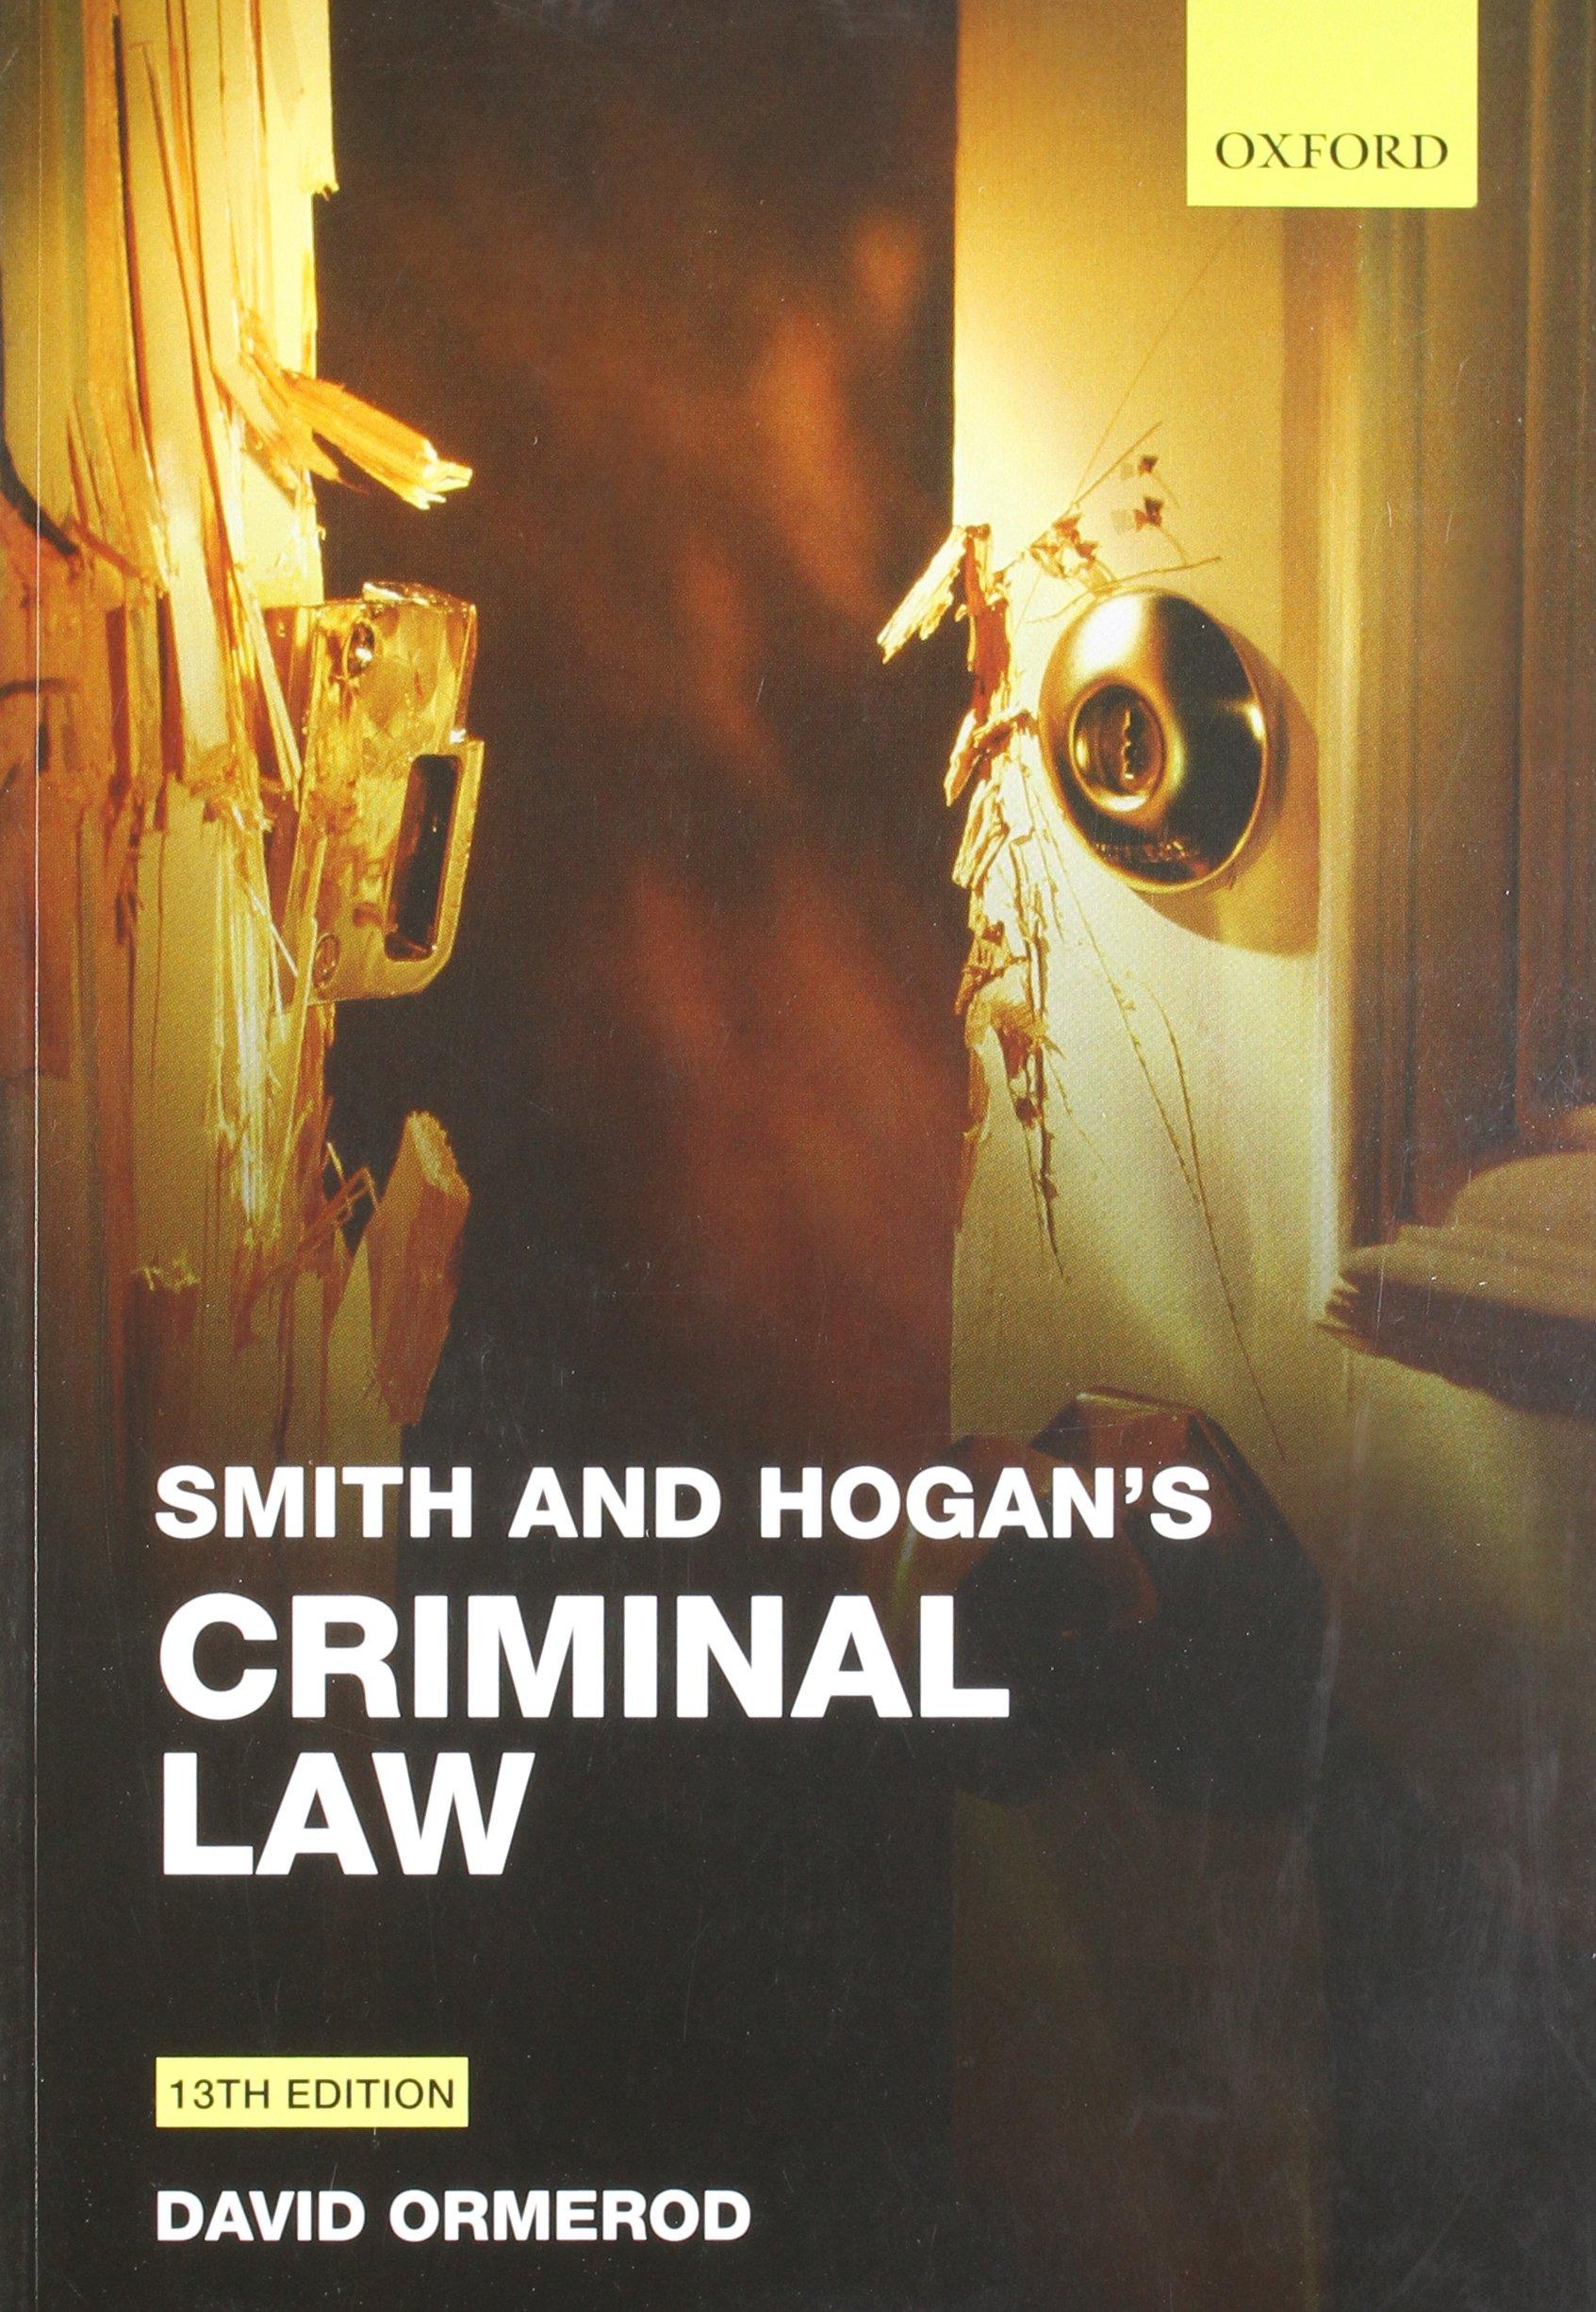 smith and hogans criminal law 13th edition david ormerod 0199586497, 978-0199586493